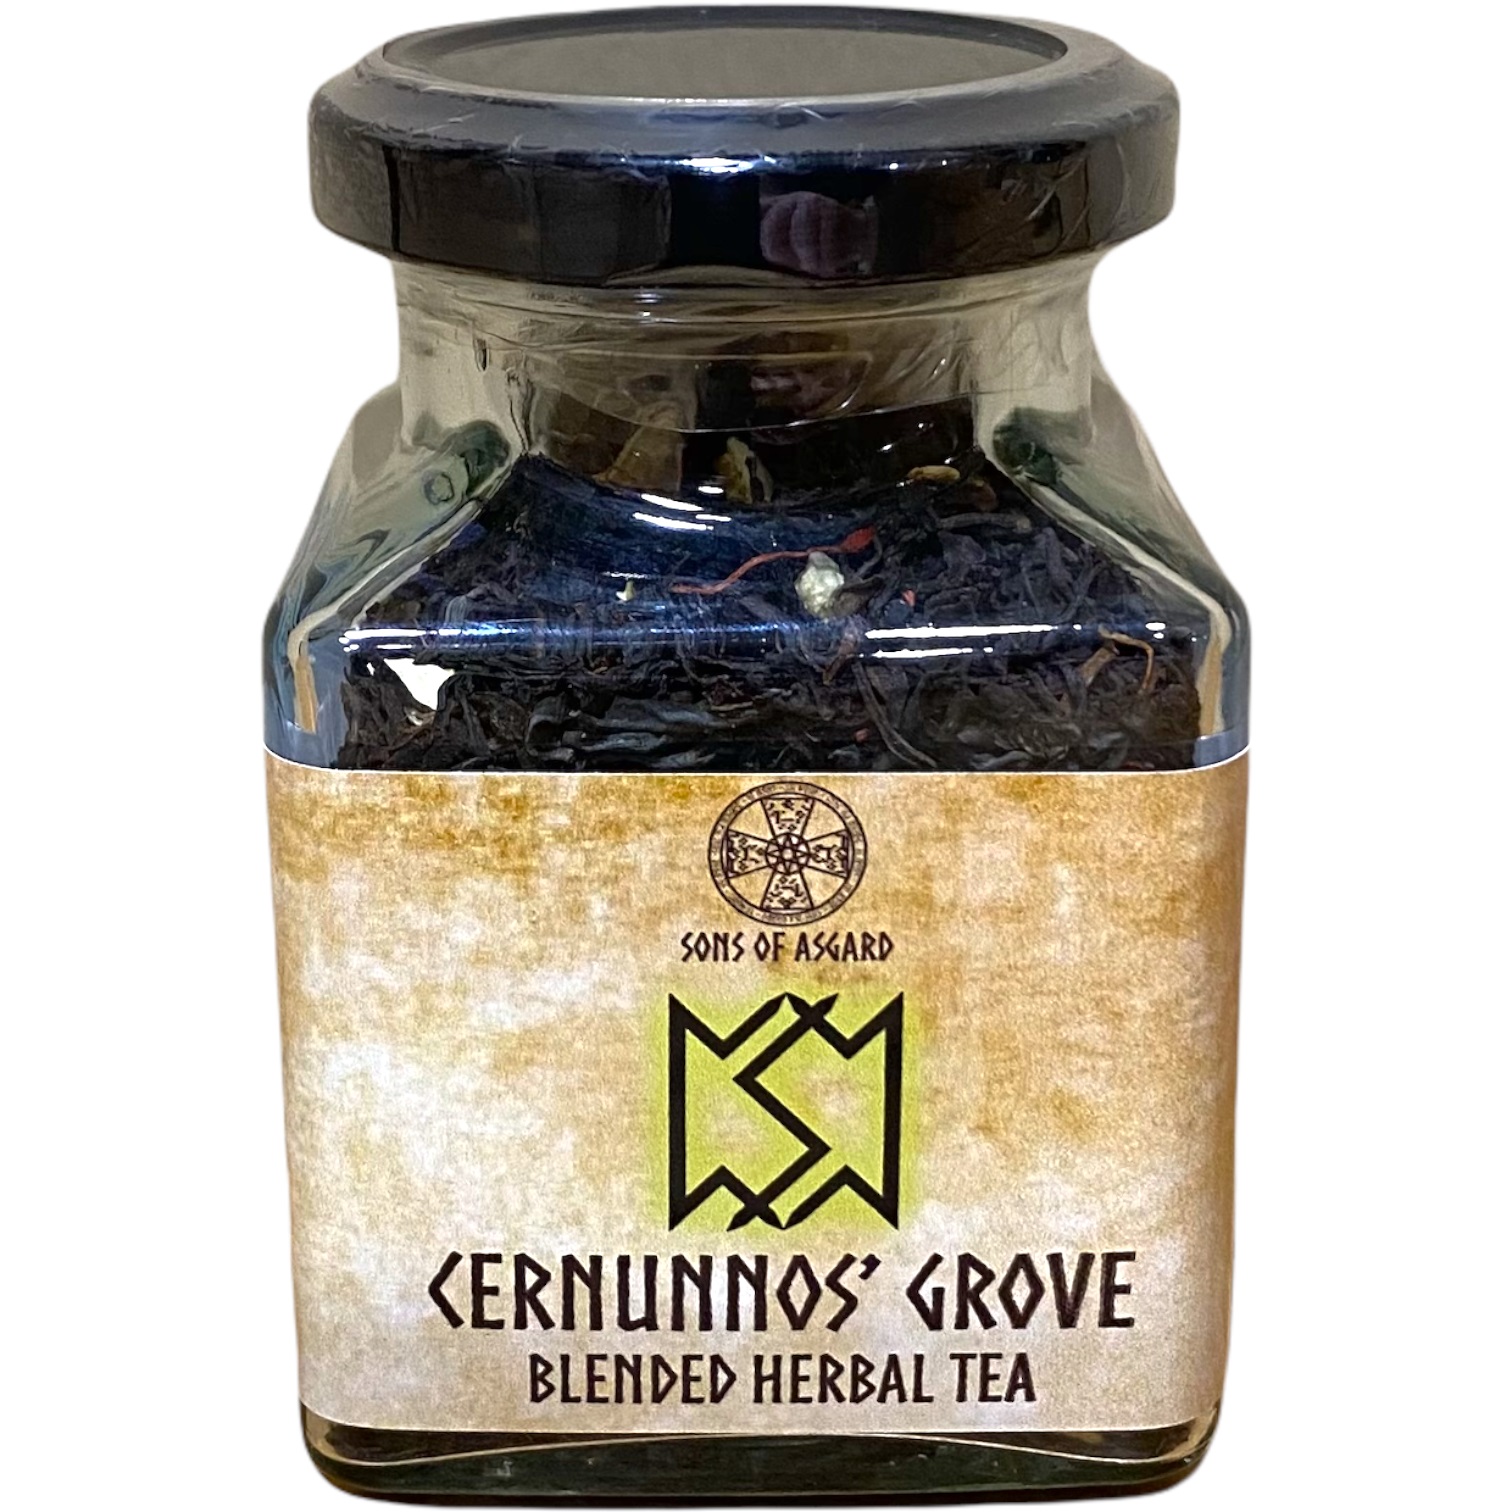 Cernunnos' Grove - Blended Herbal Tea